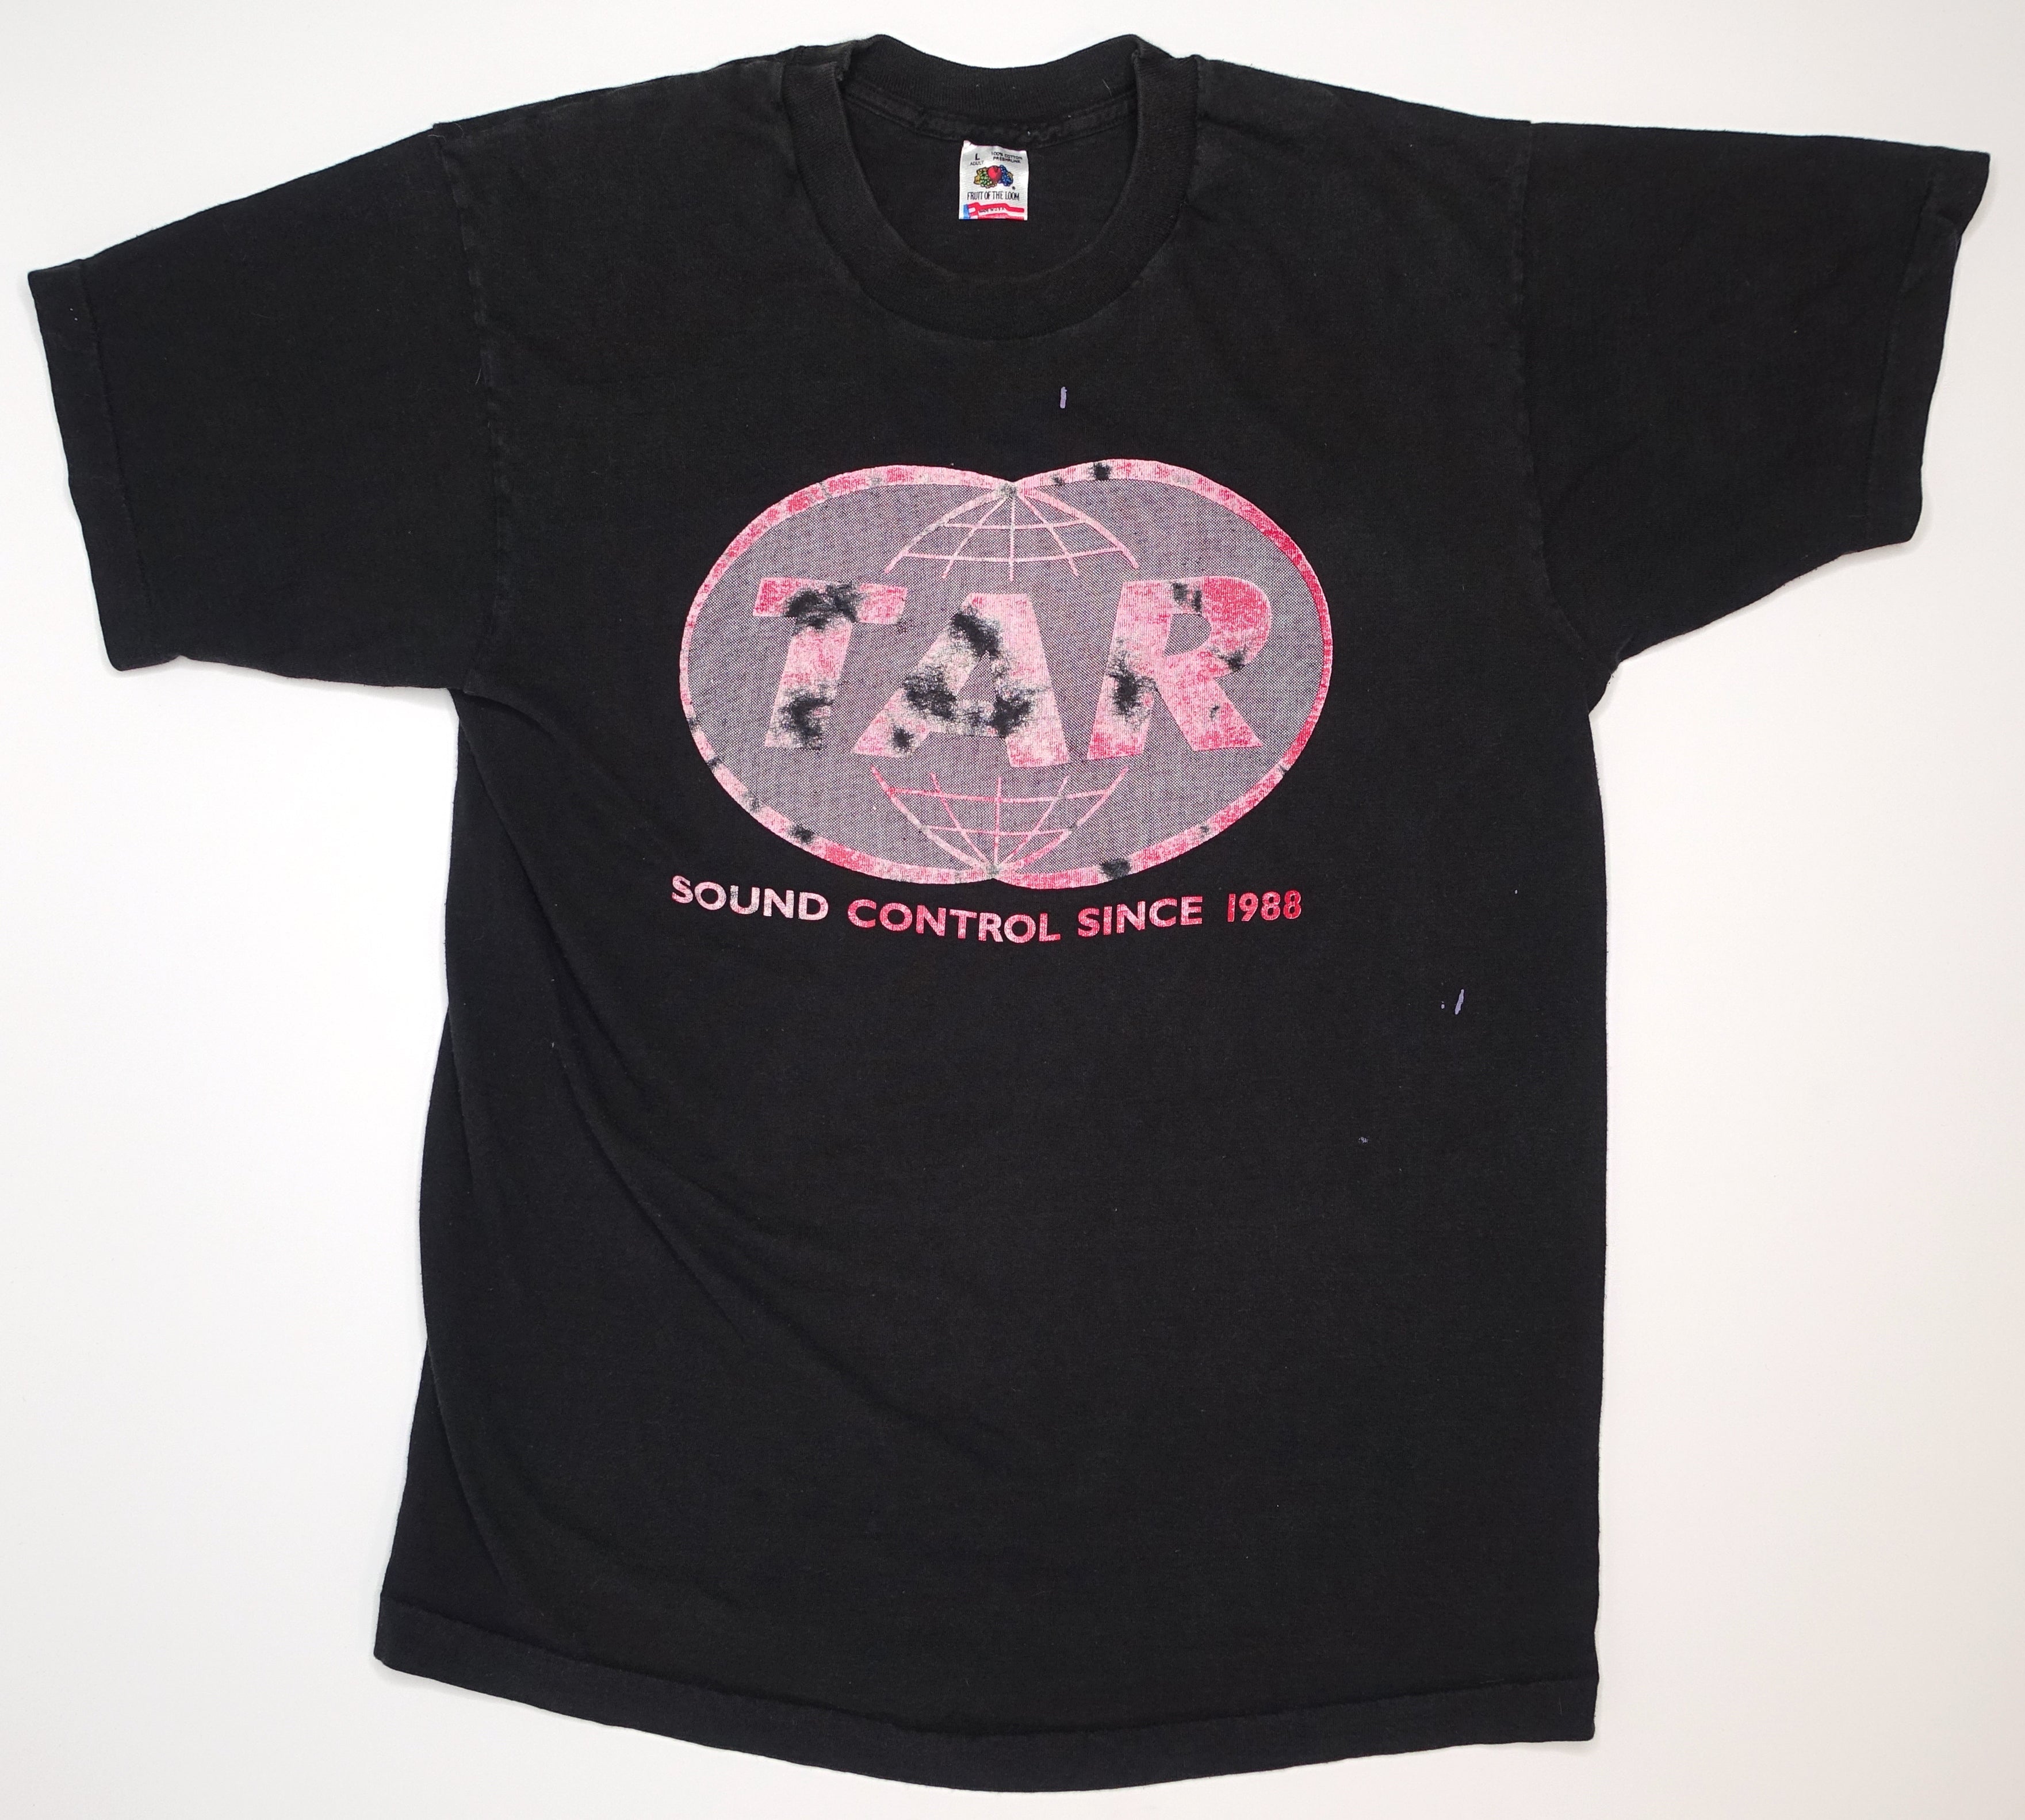 Tar – Sound Control Since 1988 Tour Shirt Size Large